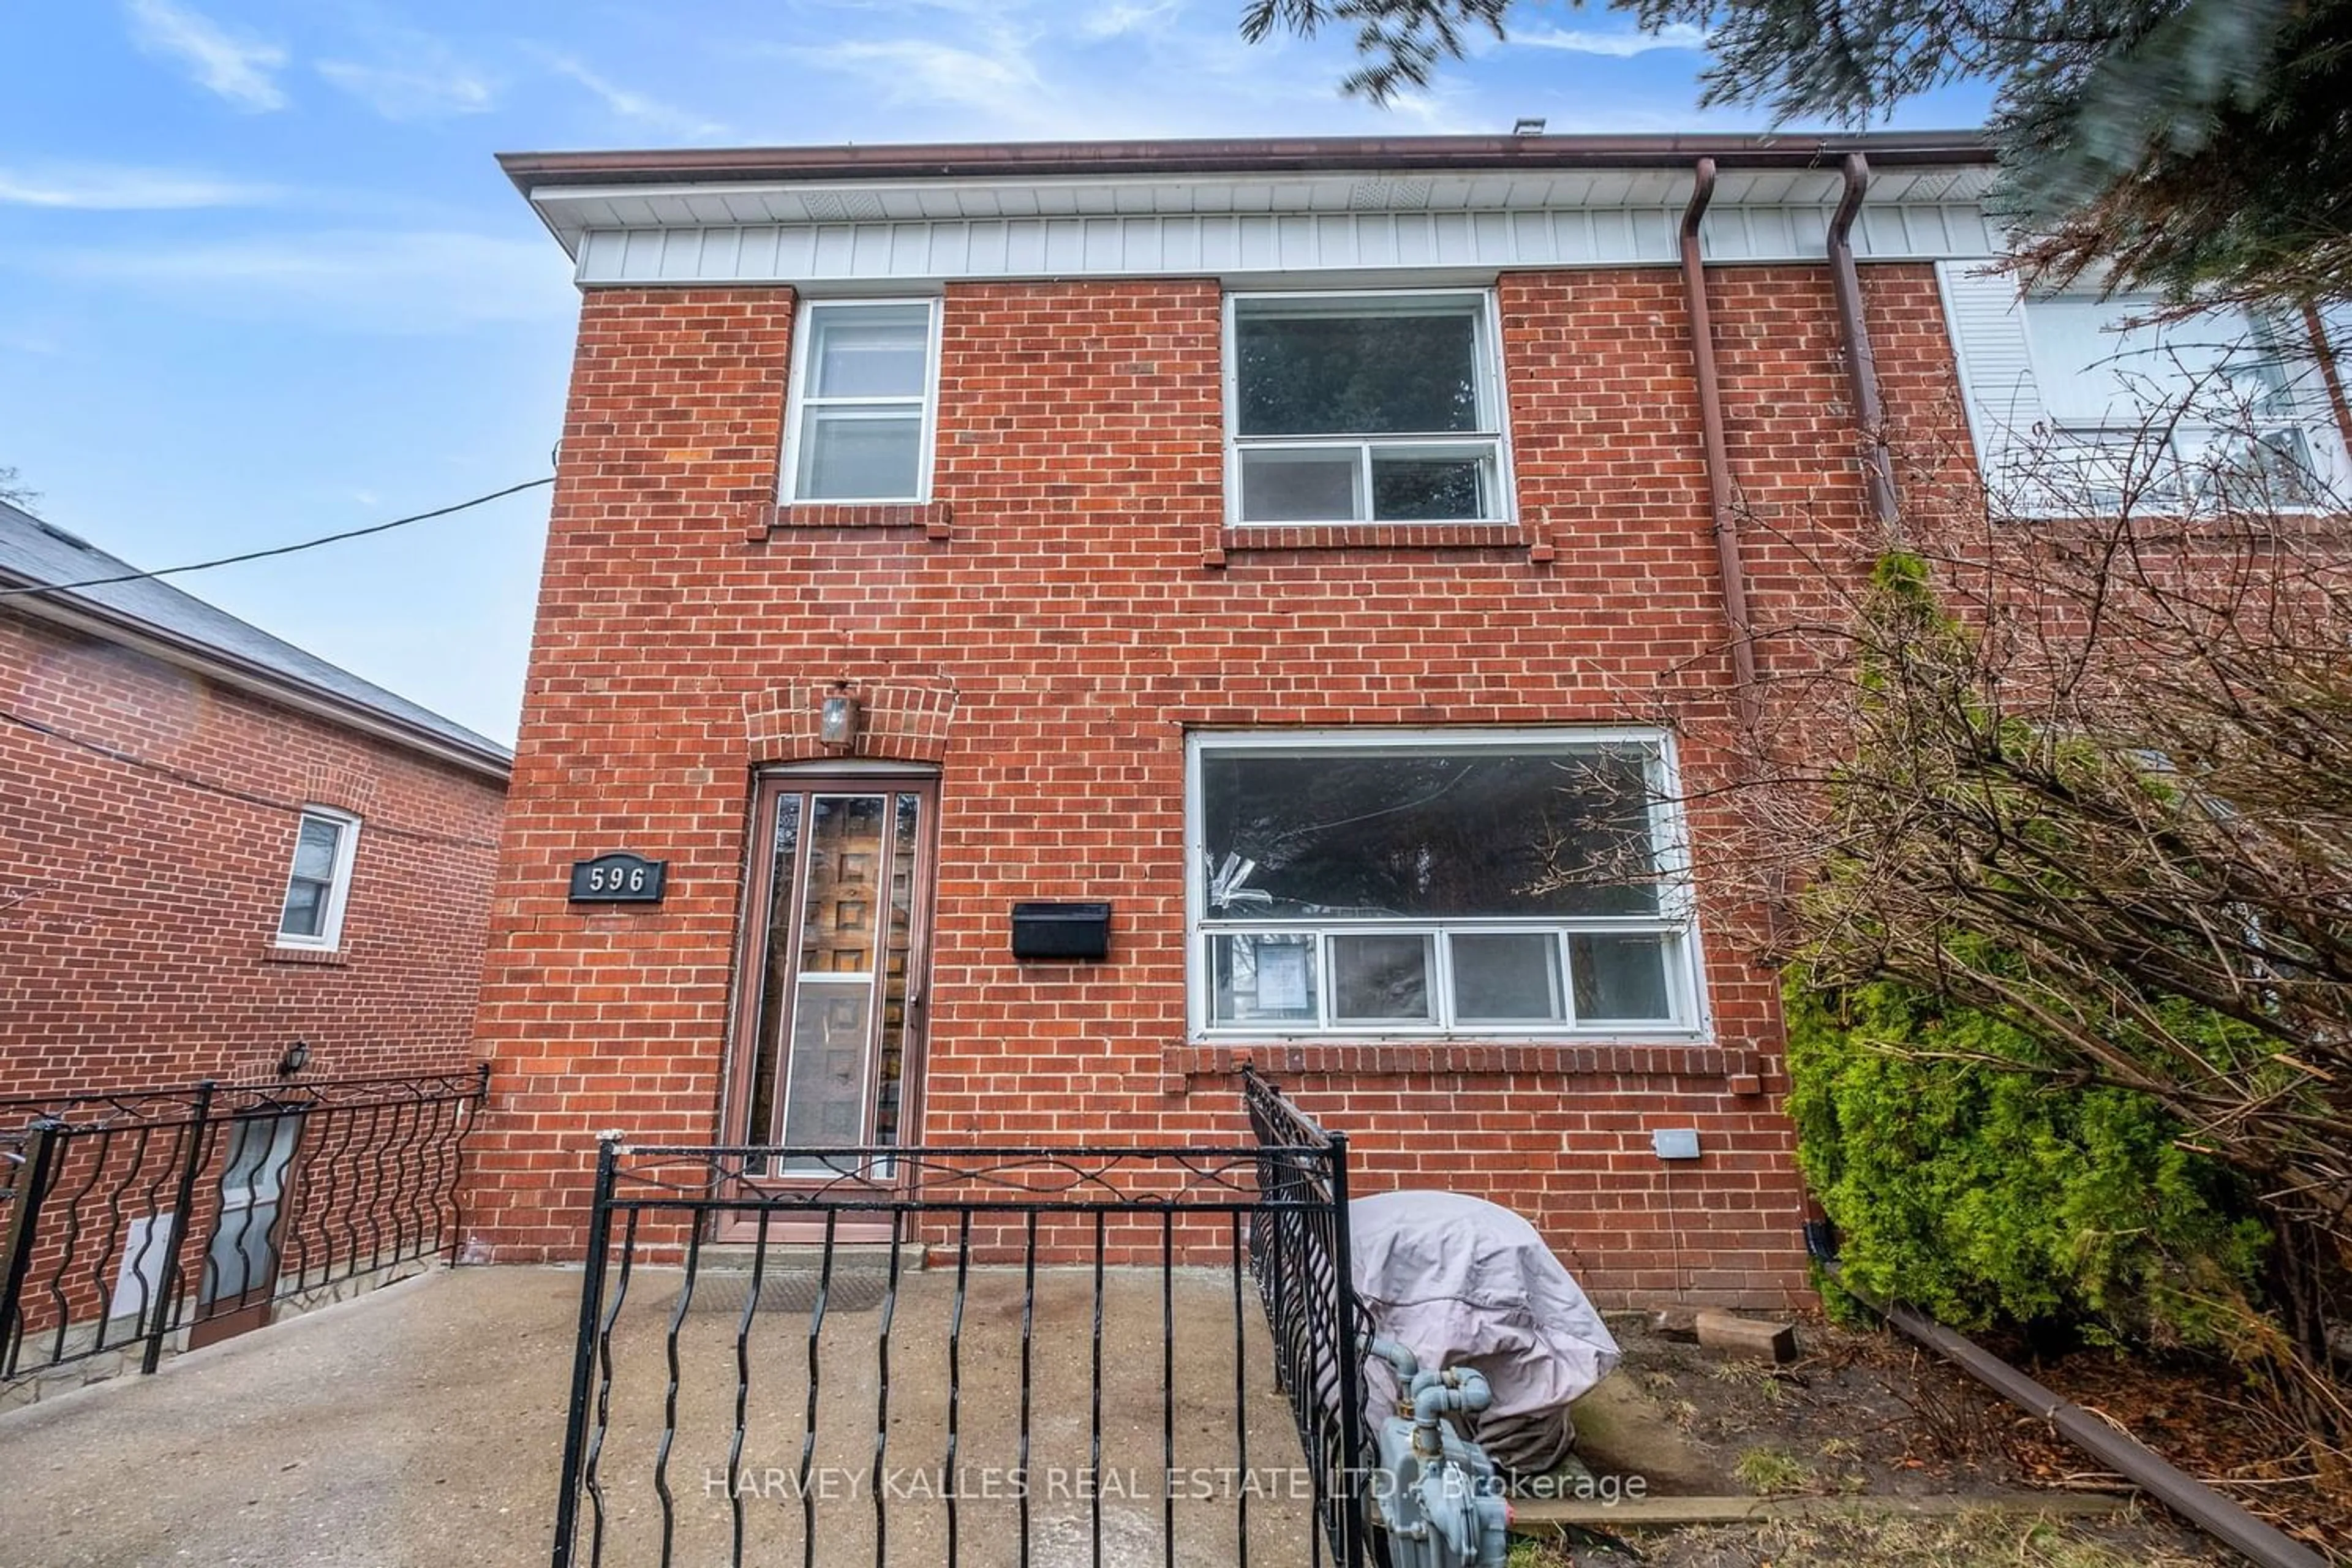 Home with brick exterior material for 596 Mcroberts Ave, Toronto Ontario M6E 4R7